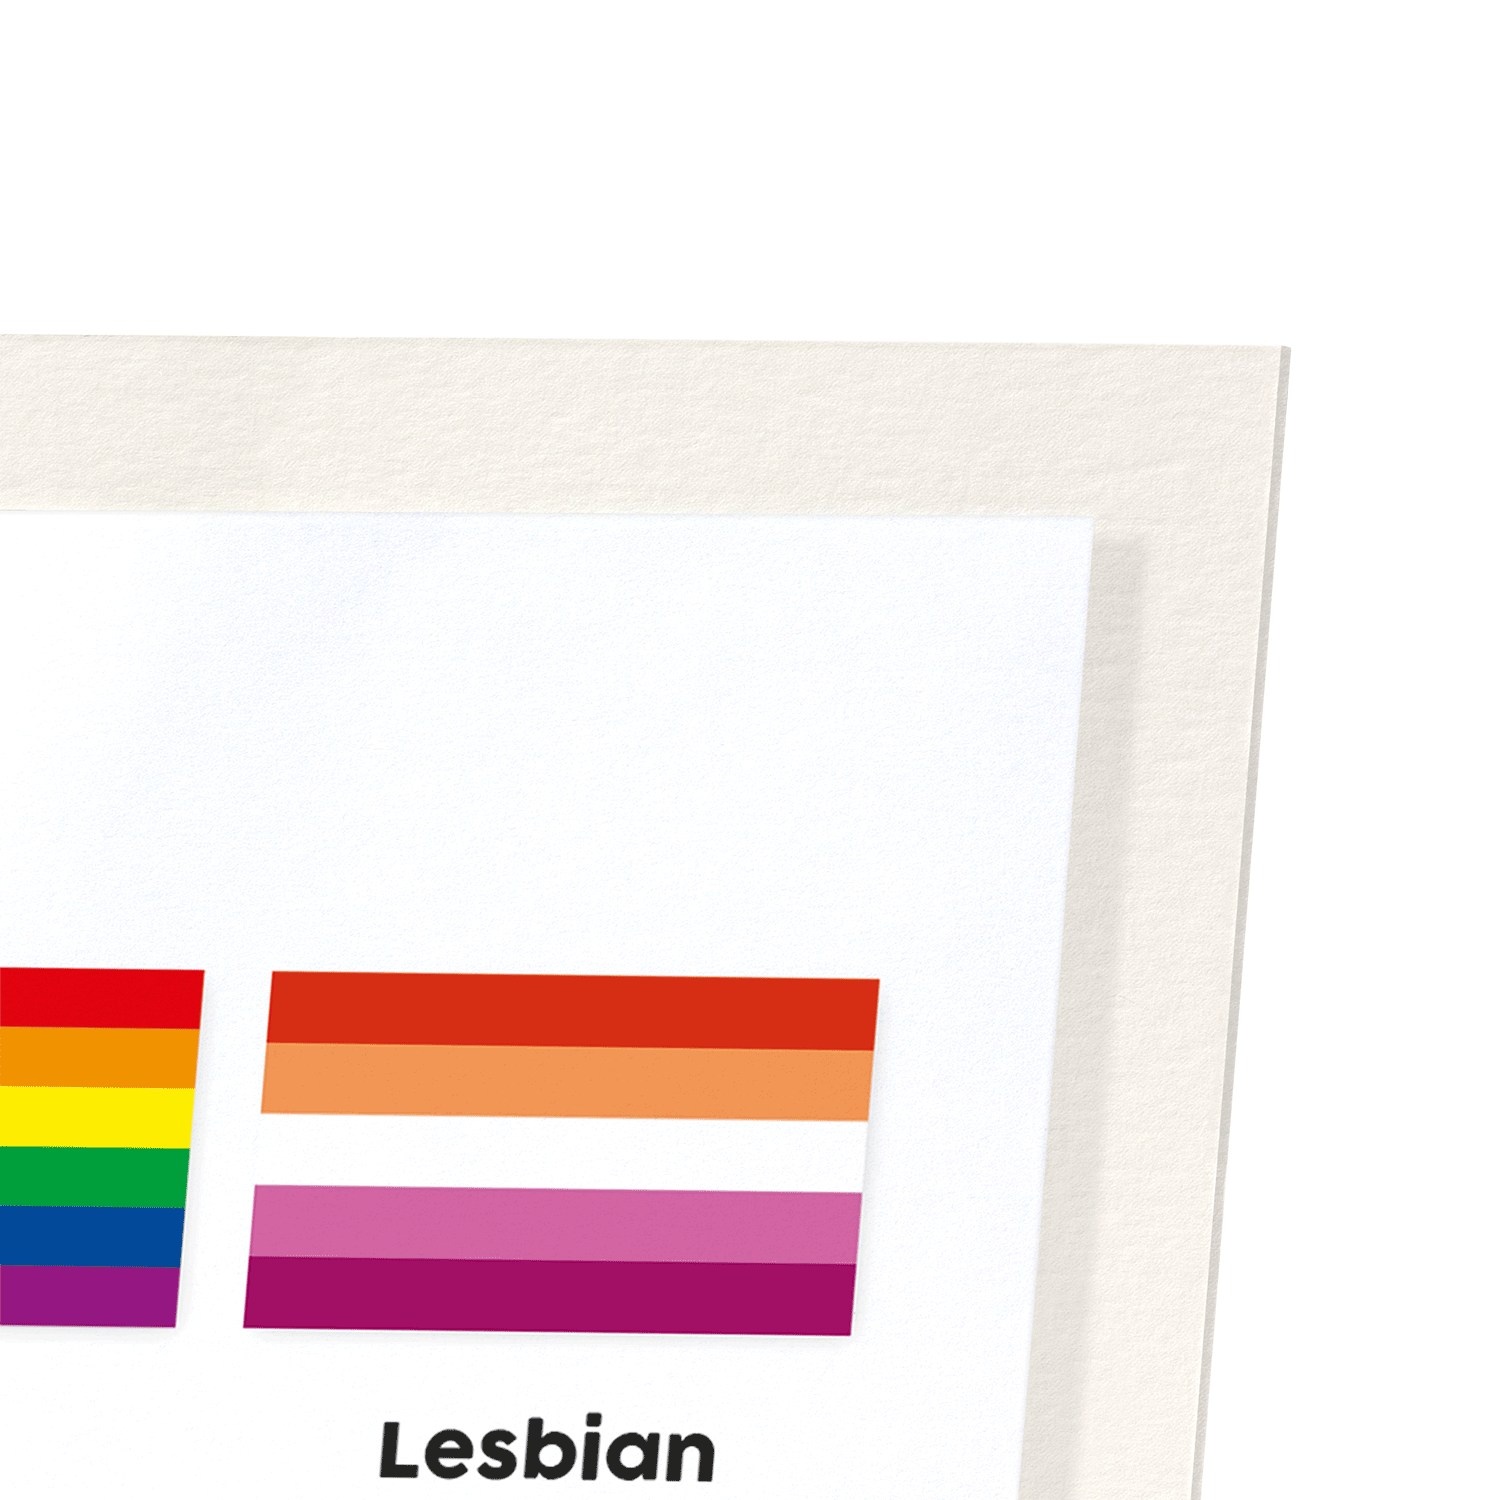 TABLE OF LGBT PRIDE FLAGS: Colourblock Art Print